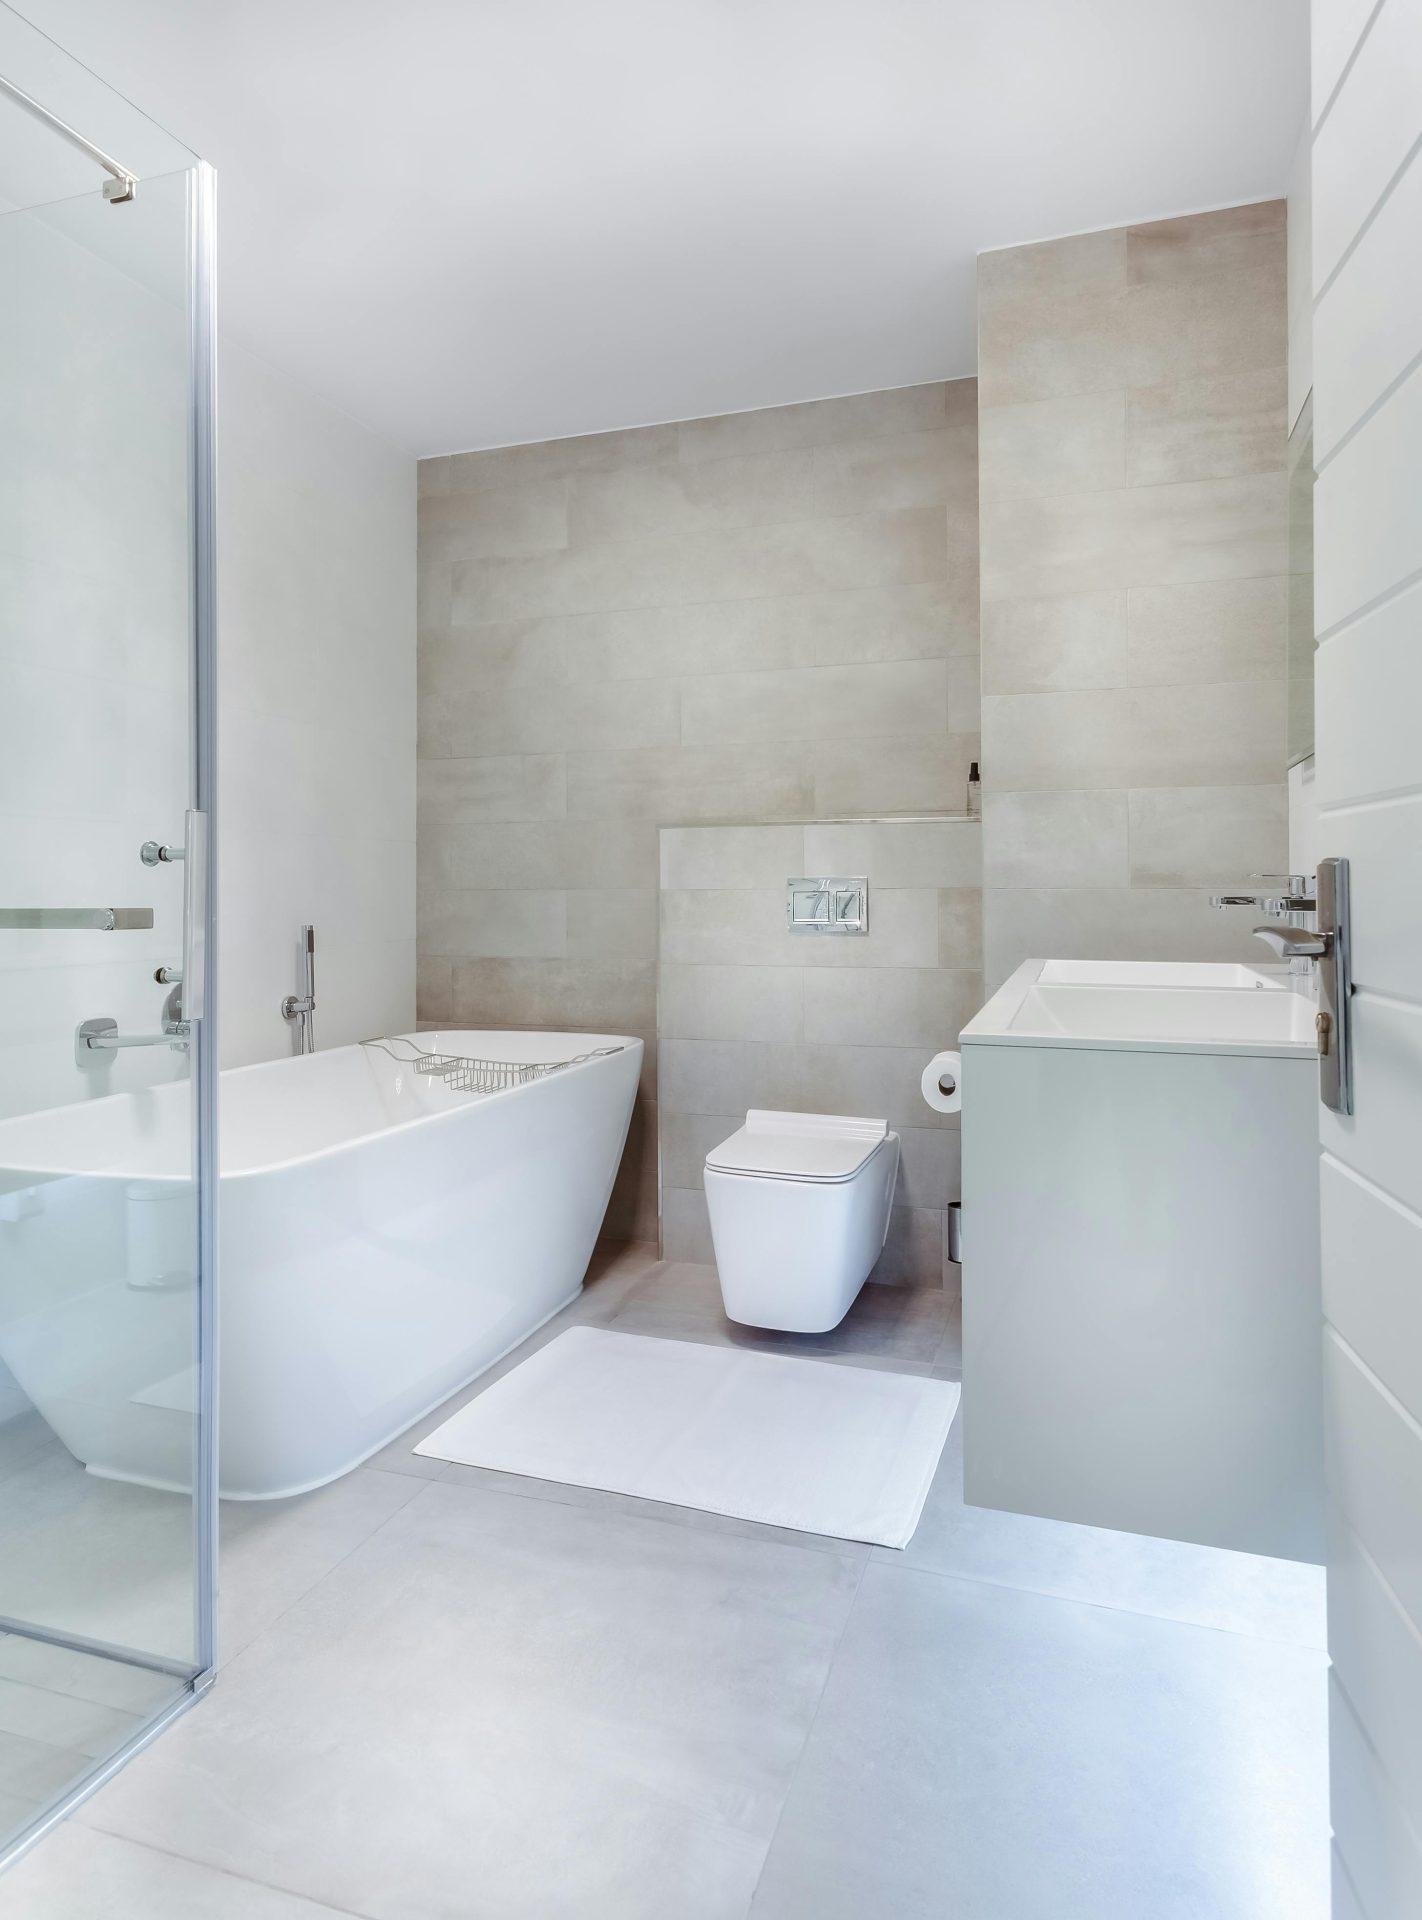 Design Principles for Luxury Bathrooms